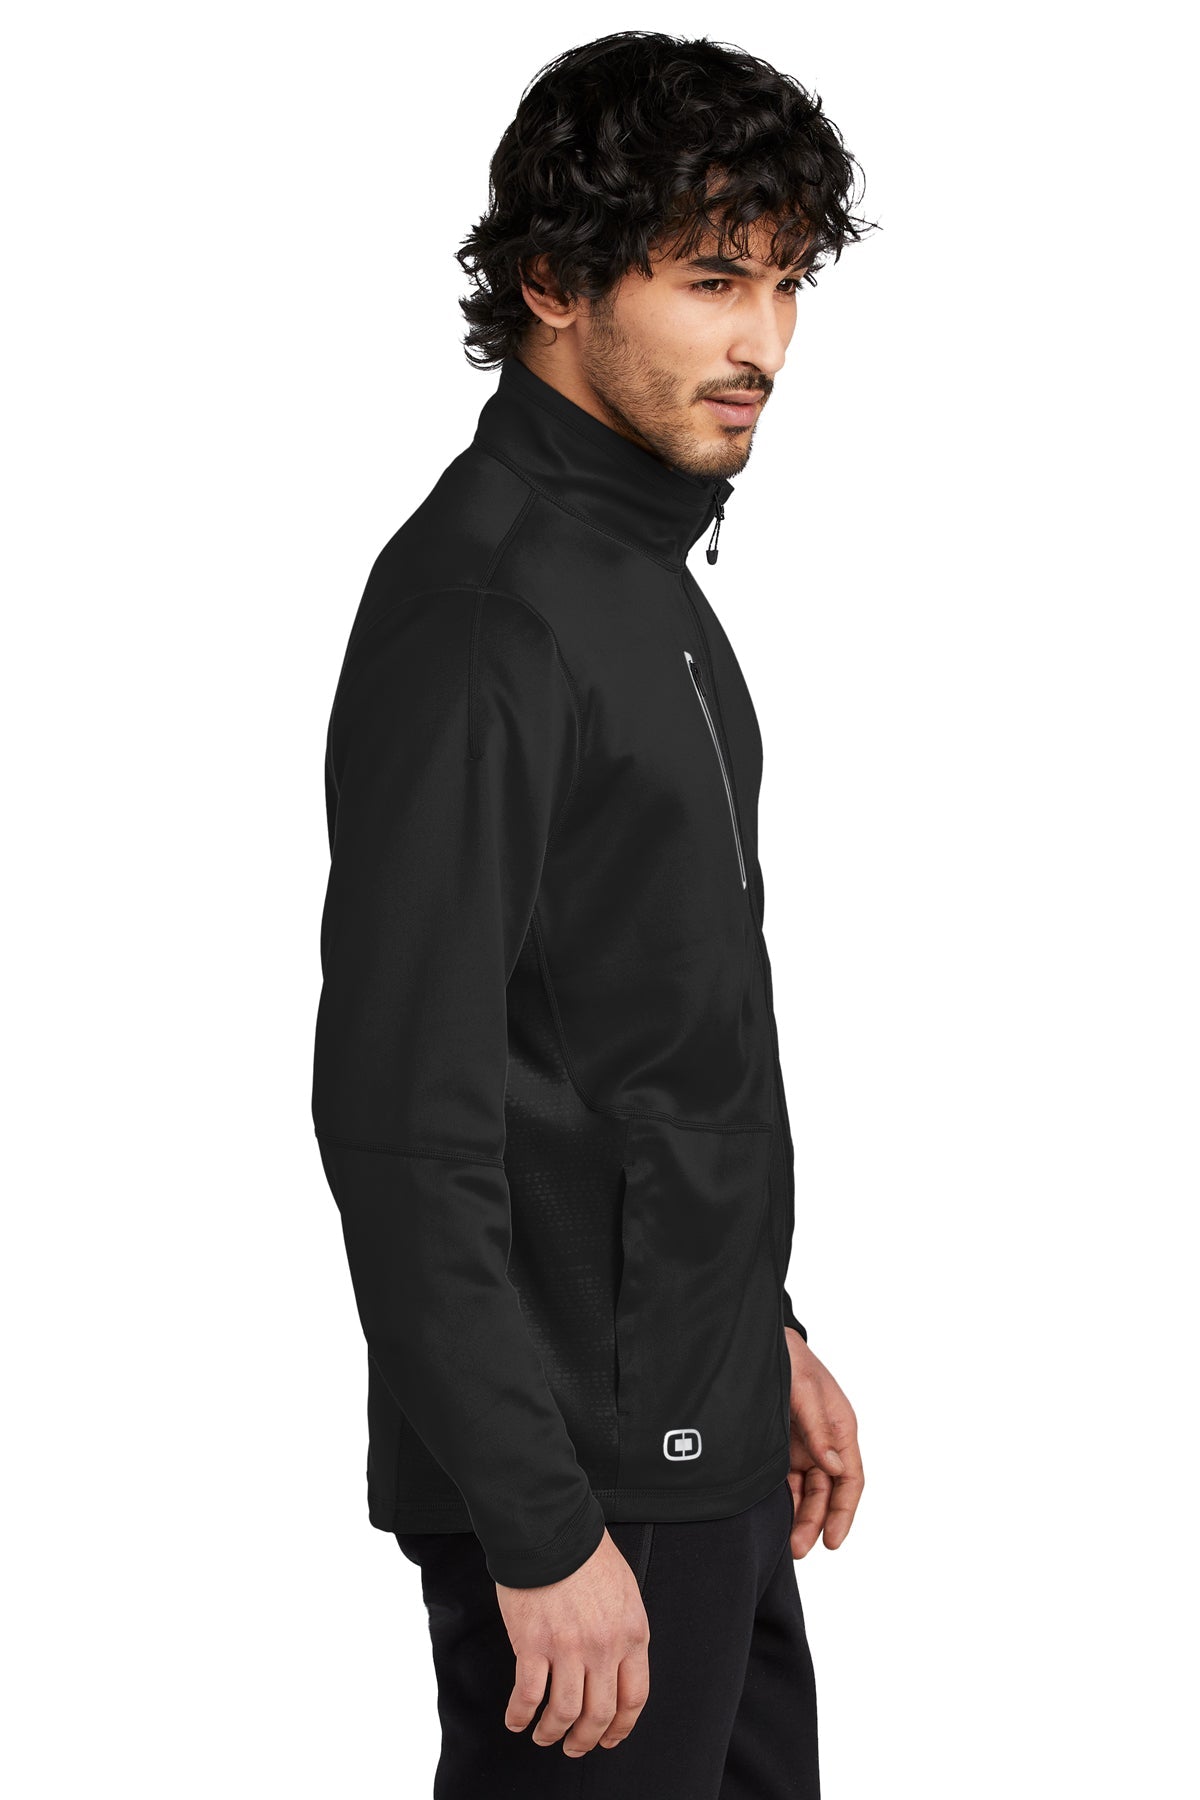 ogio endurance_oe700 _blacktop_company_logo_jackets